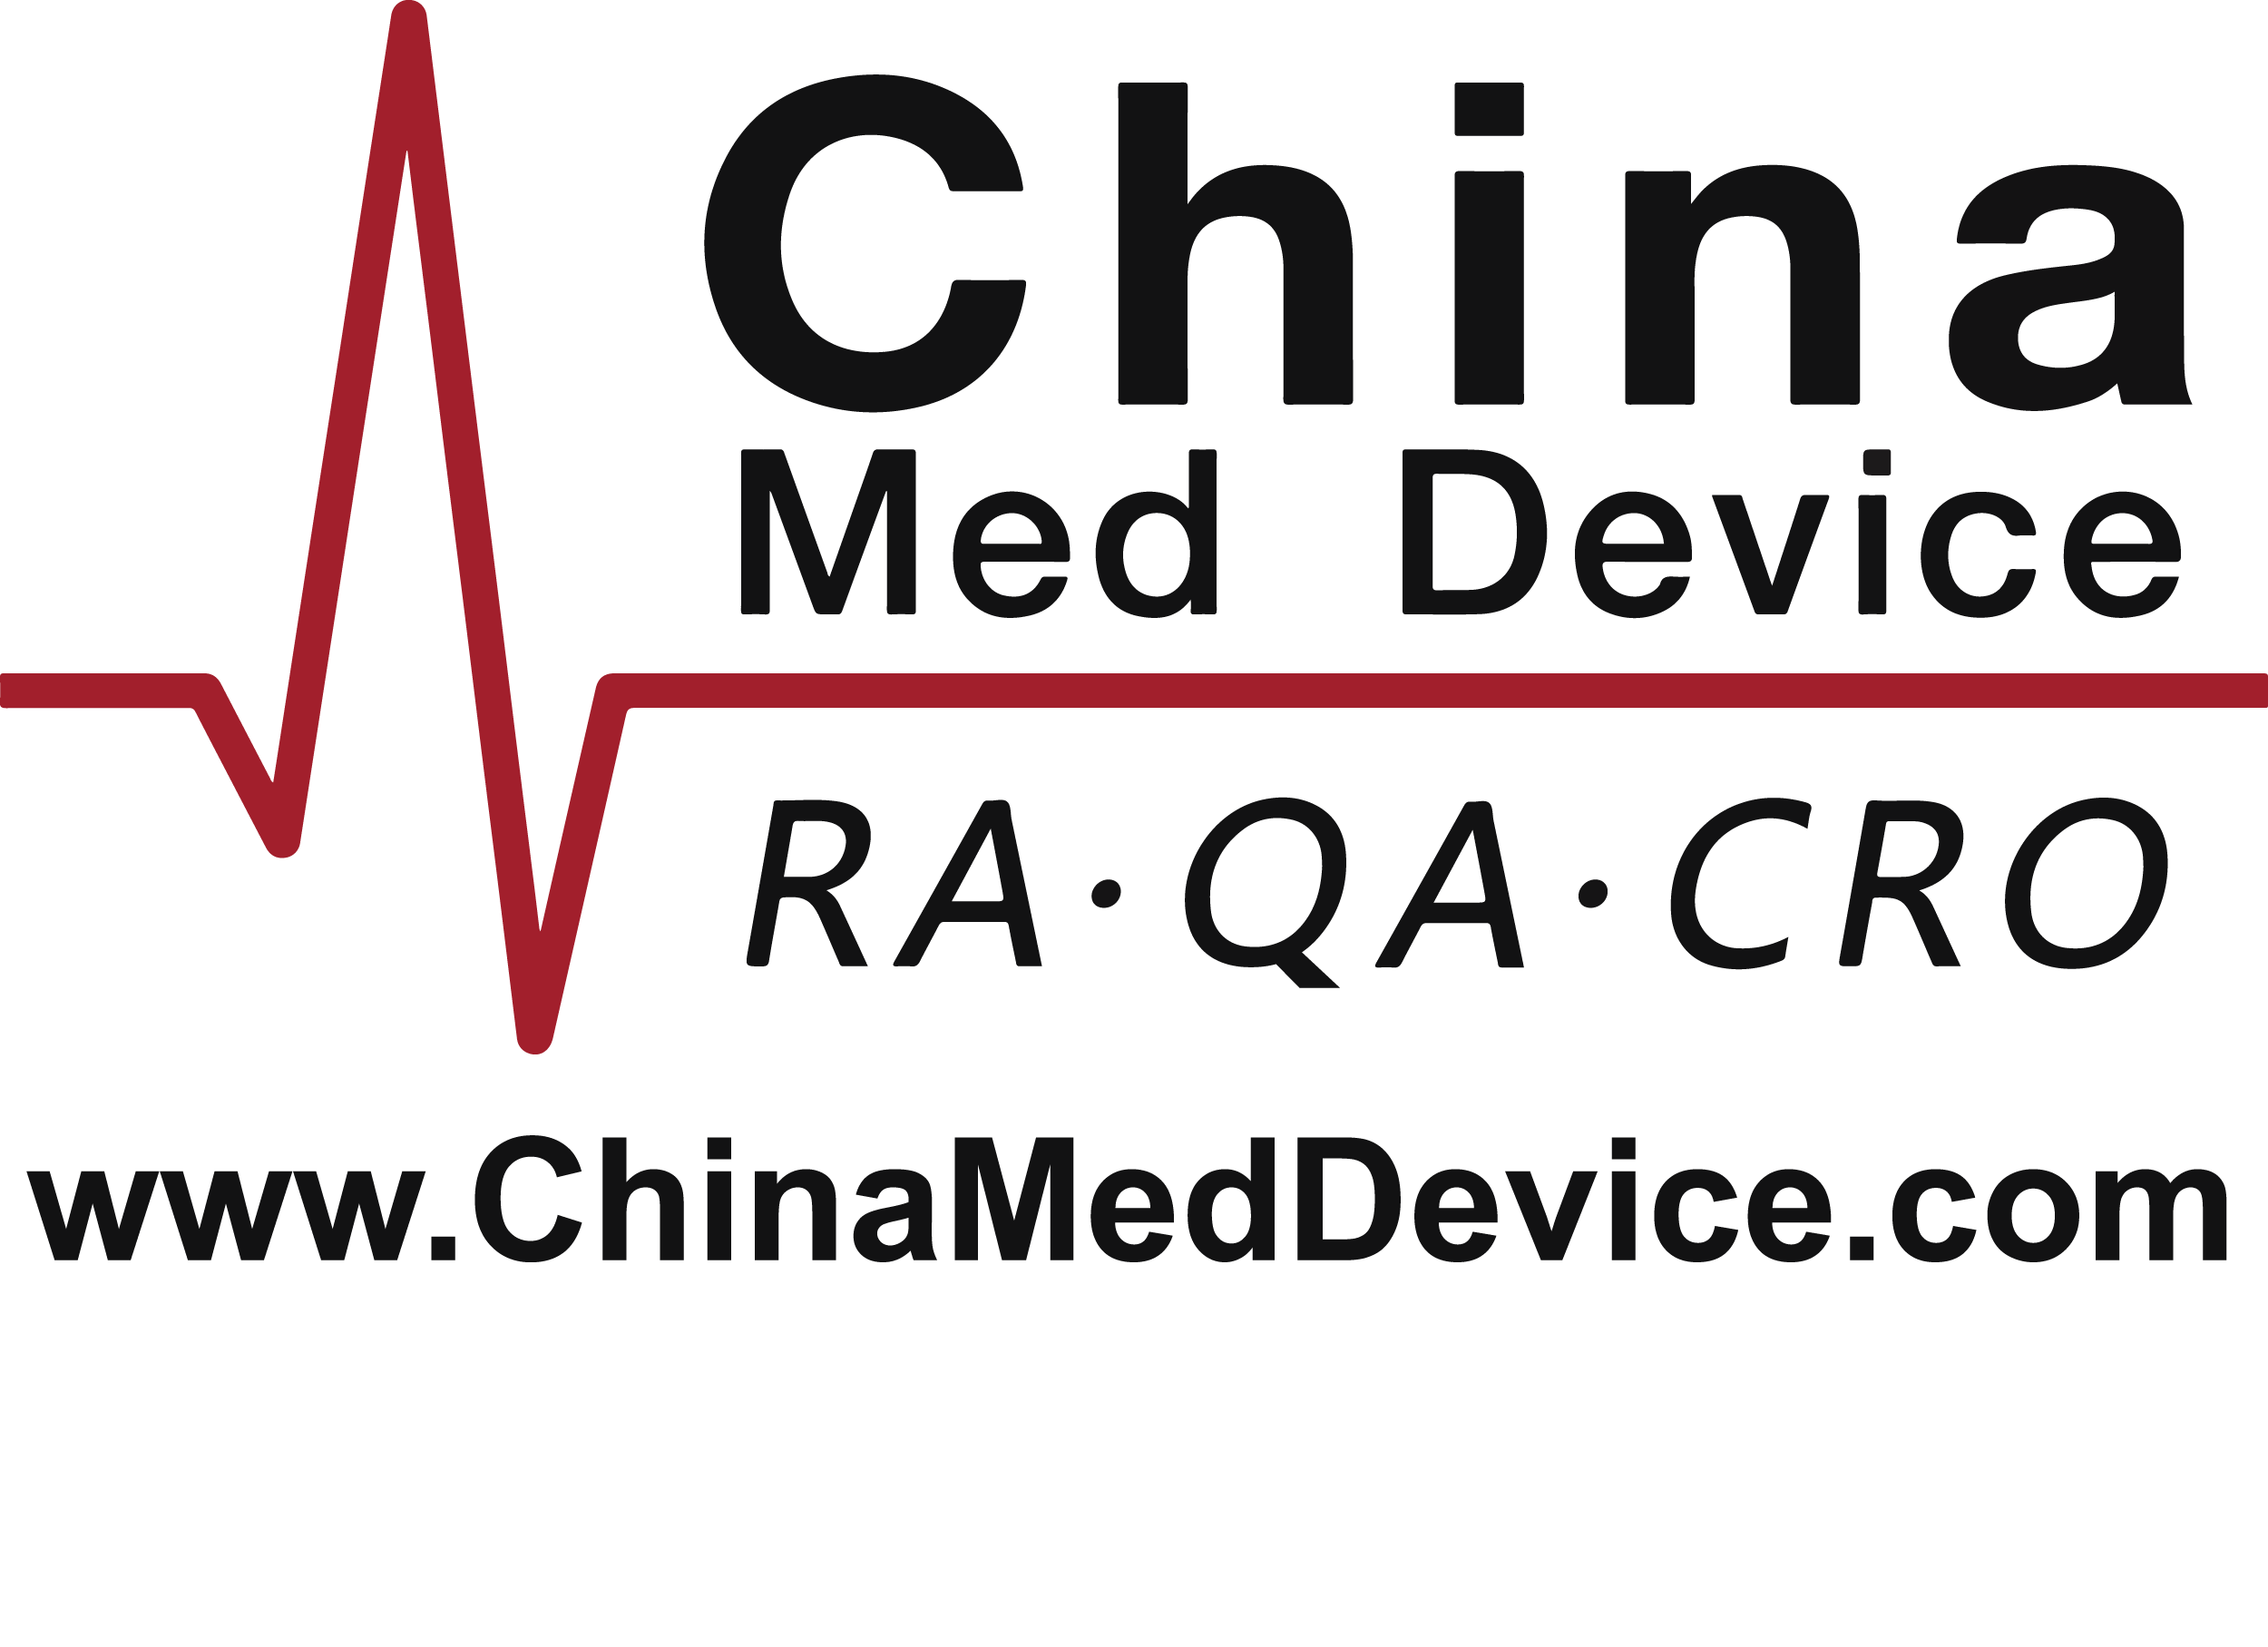 China Medical Device